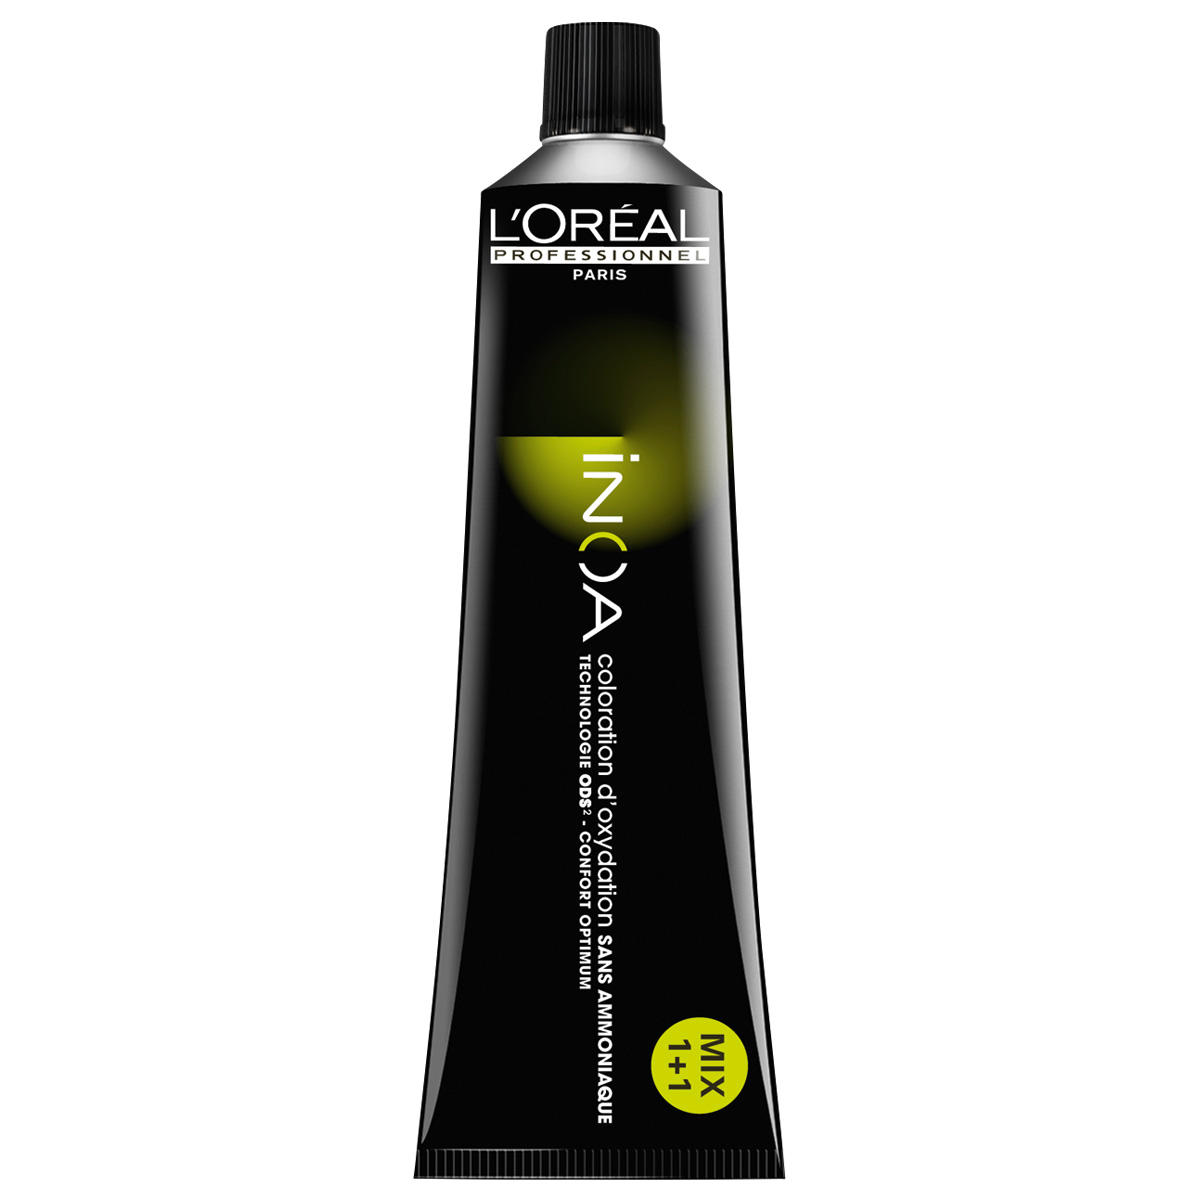 L'Oréal Professionnel Paris Coloration 4 Marrone medio, tubo 60 ml